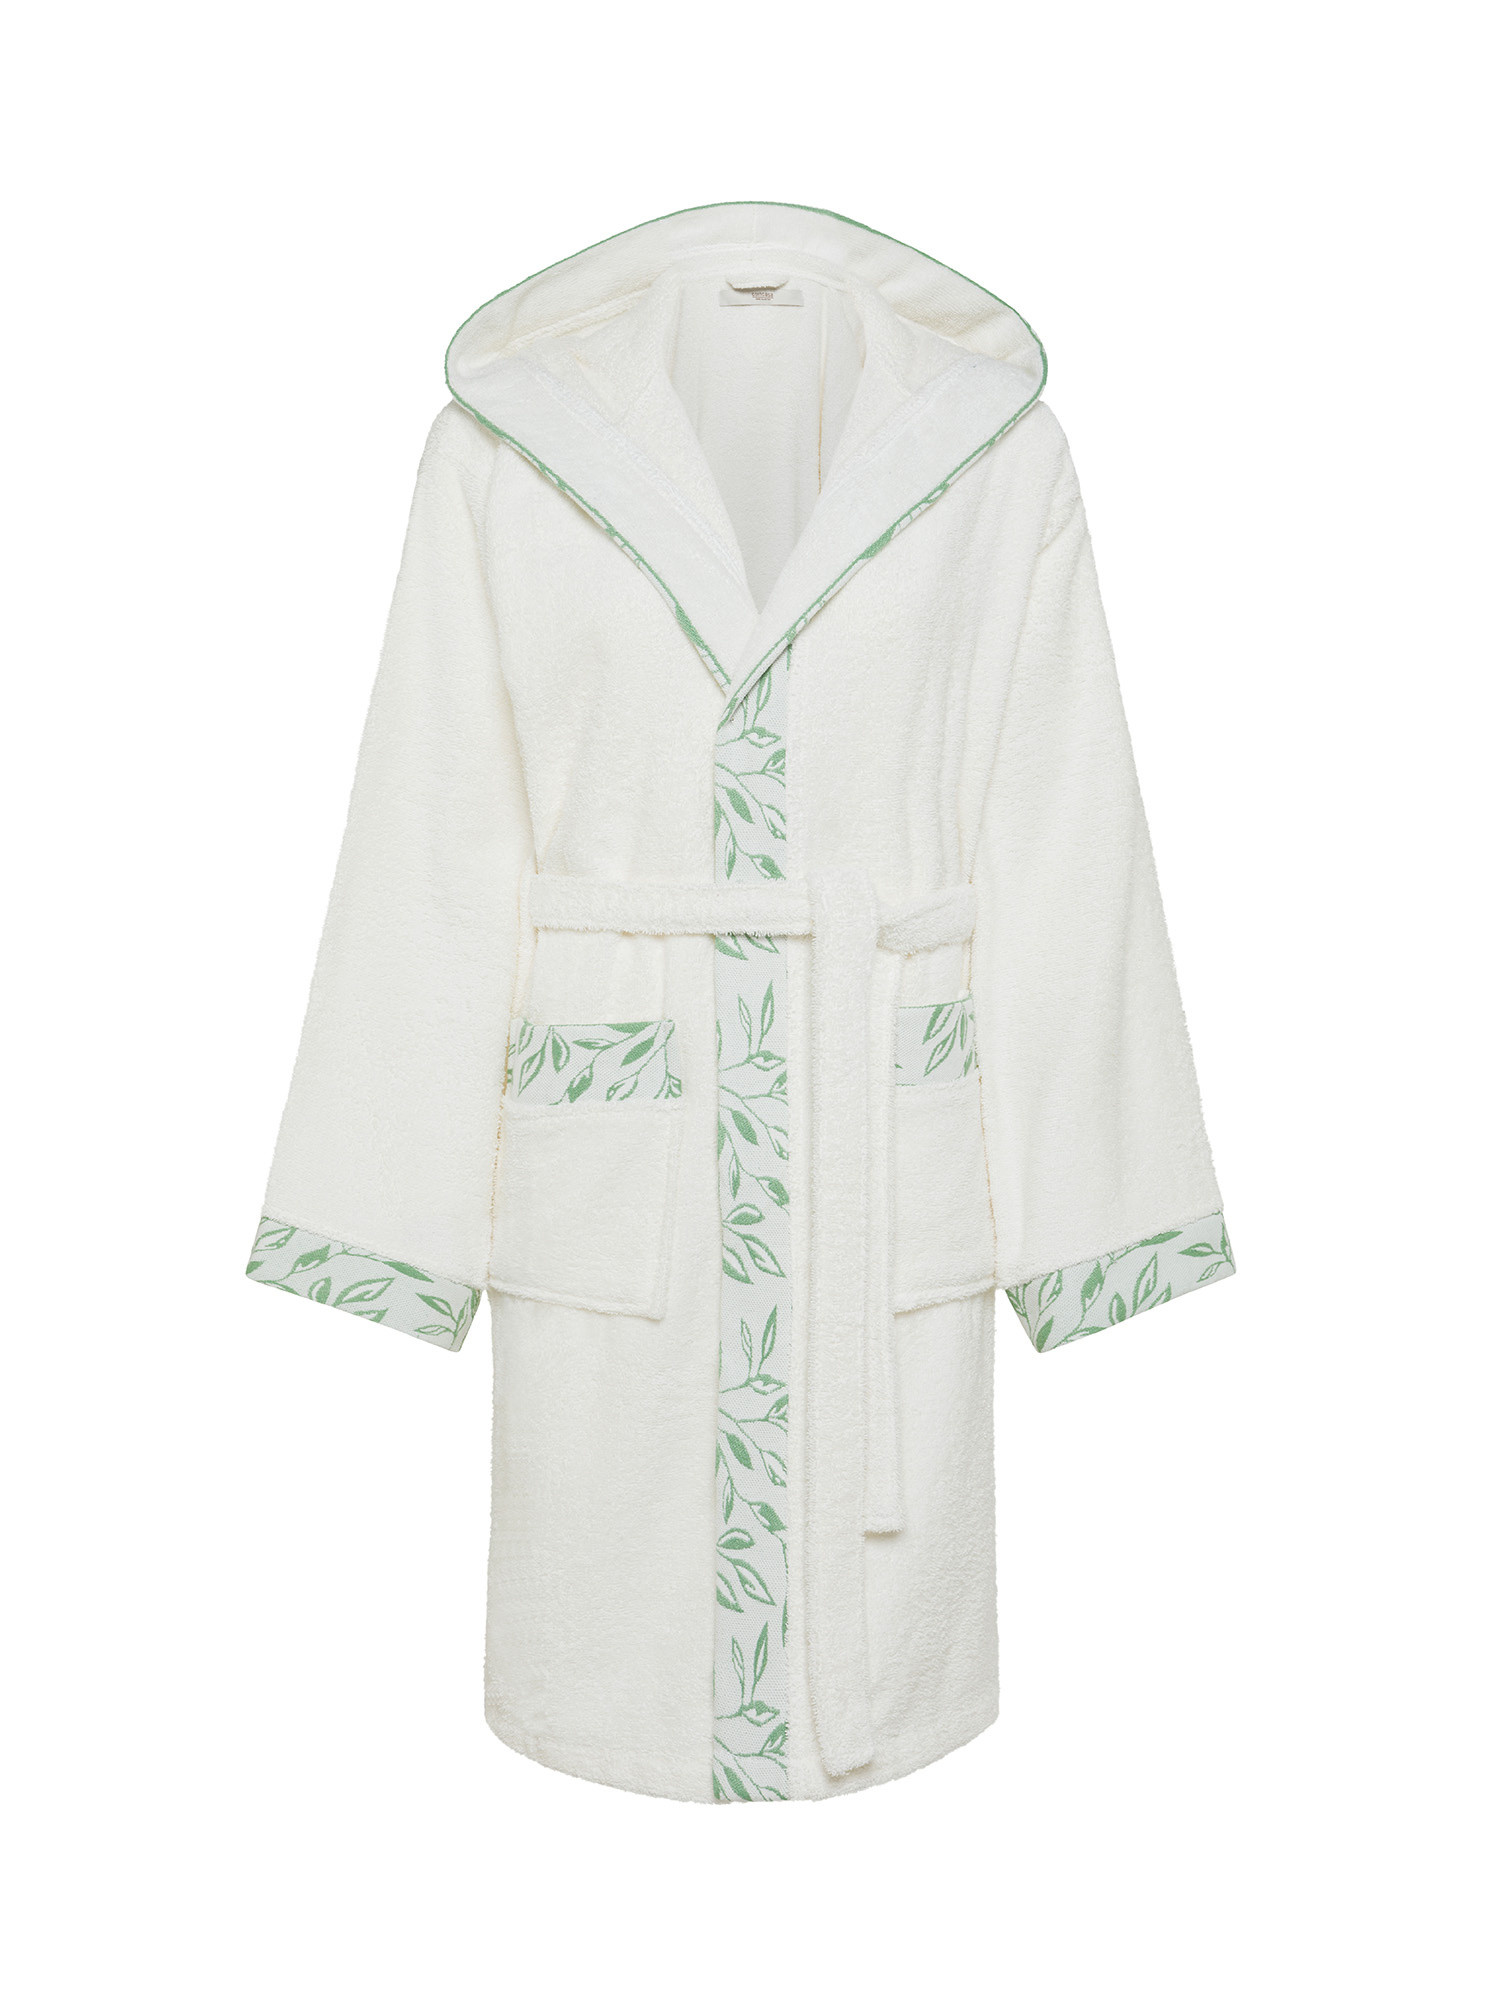 Cotton terry bathrobe with jacquard edge, White, large image number 0